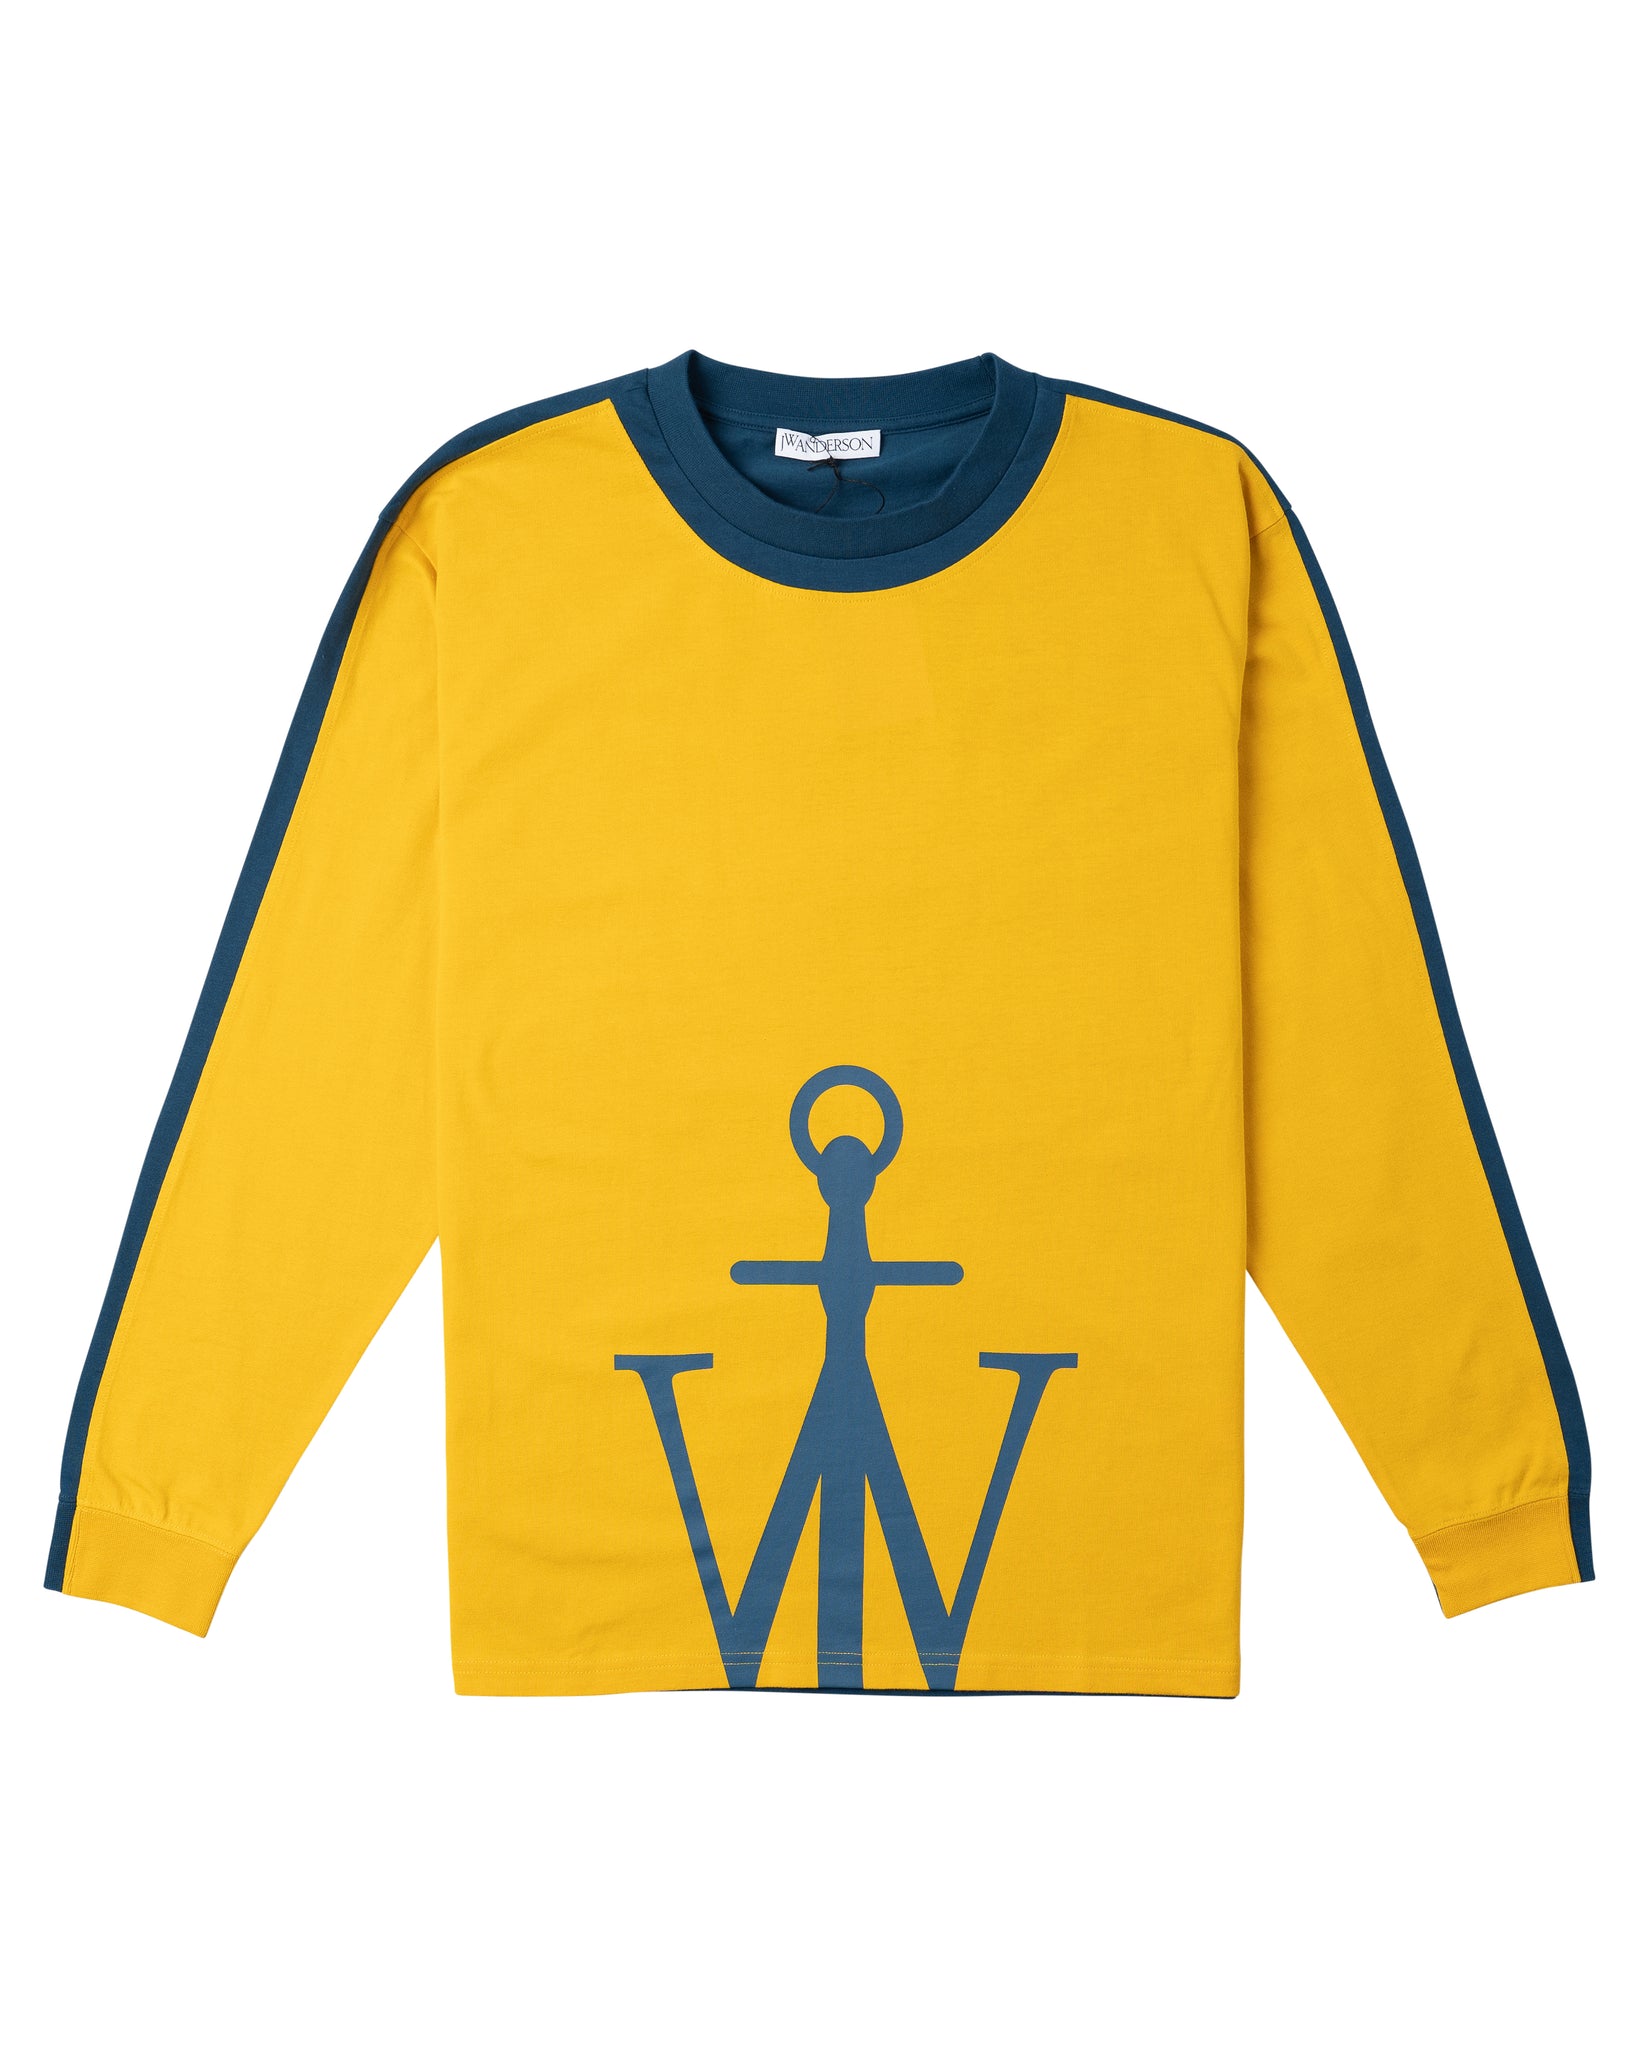 JW Anderson Half Anchor L/S T-Shirt Mustard/Petrol